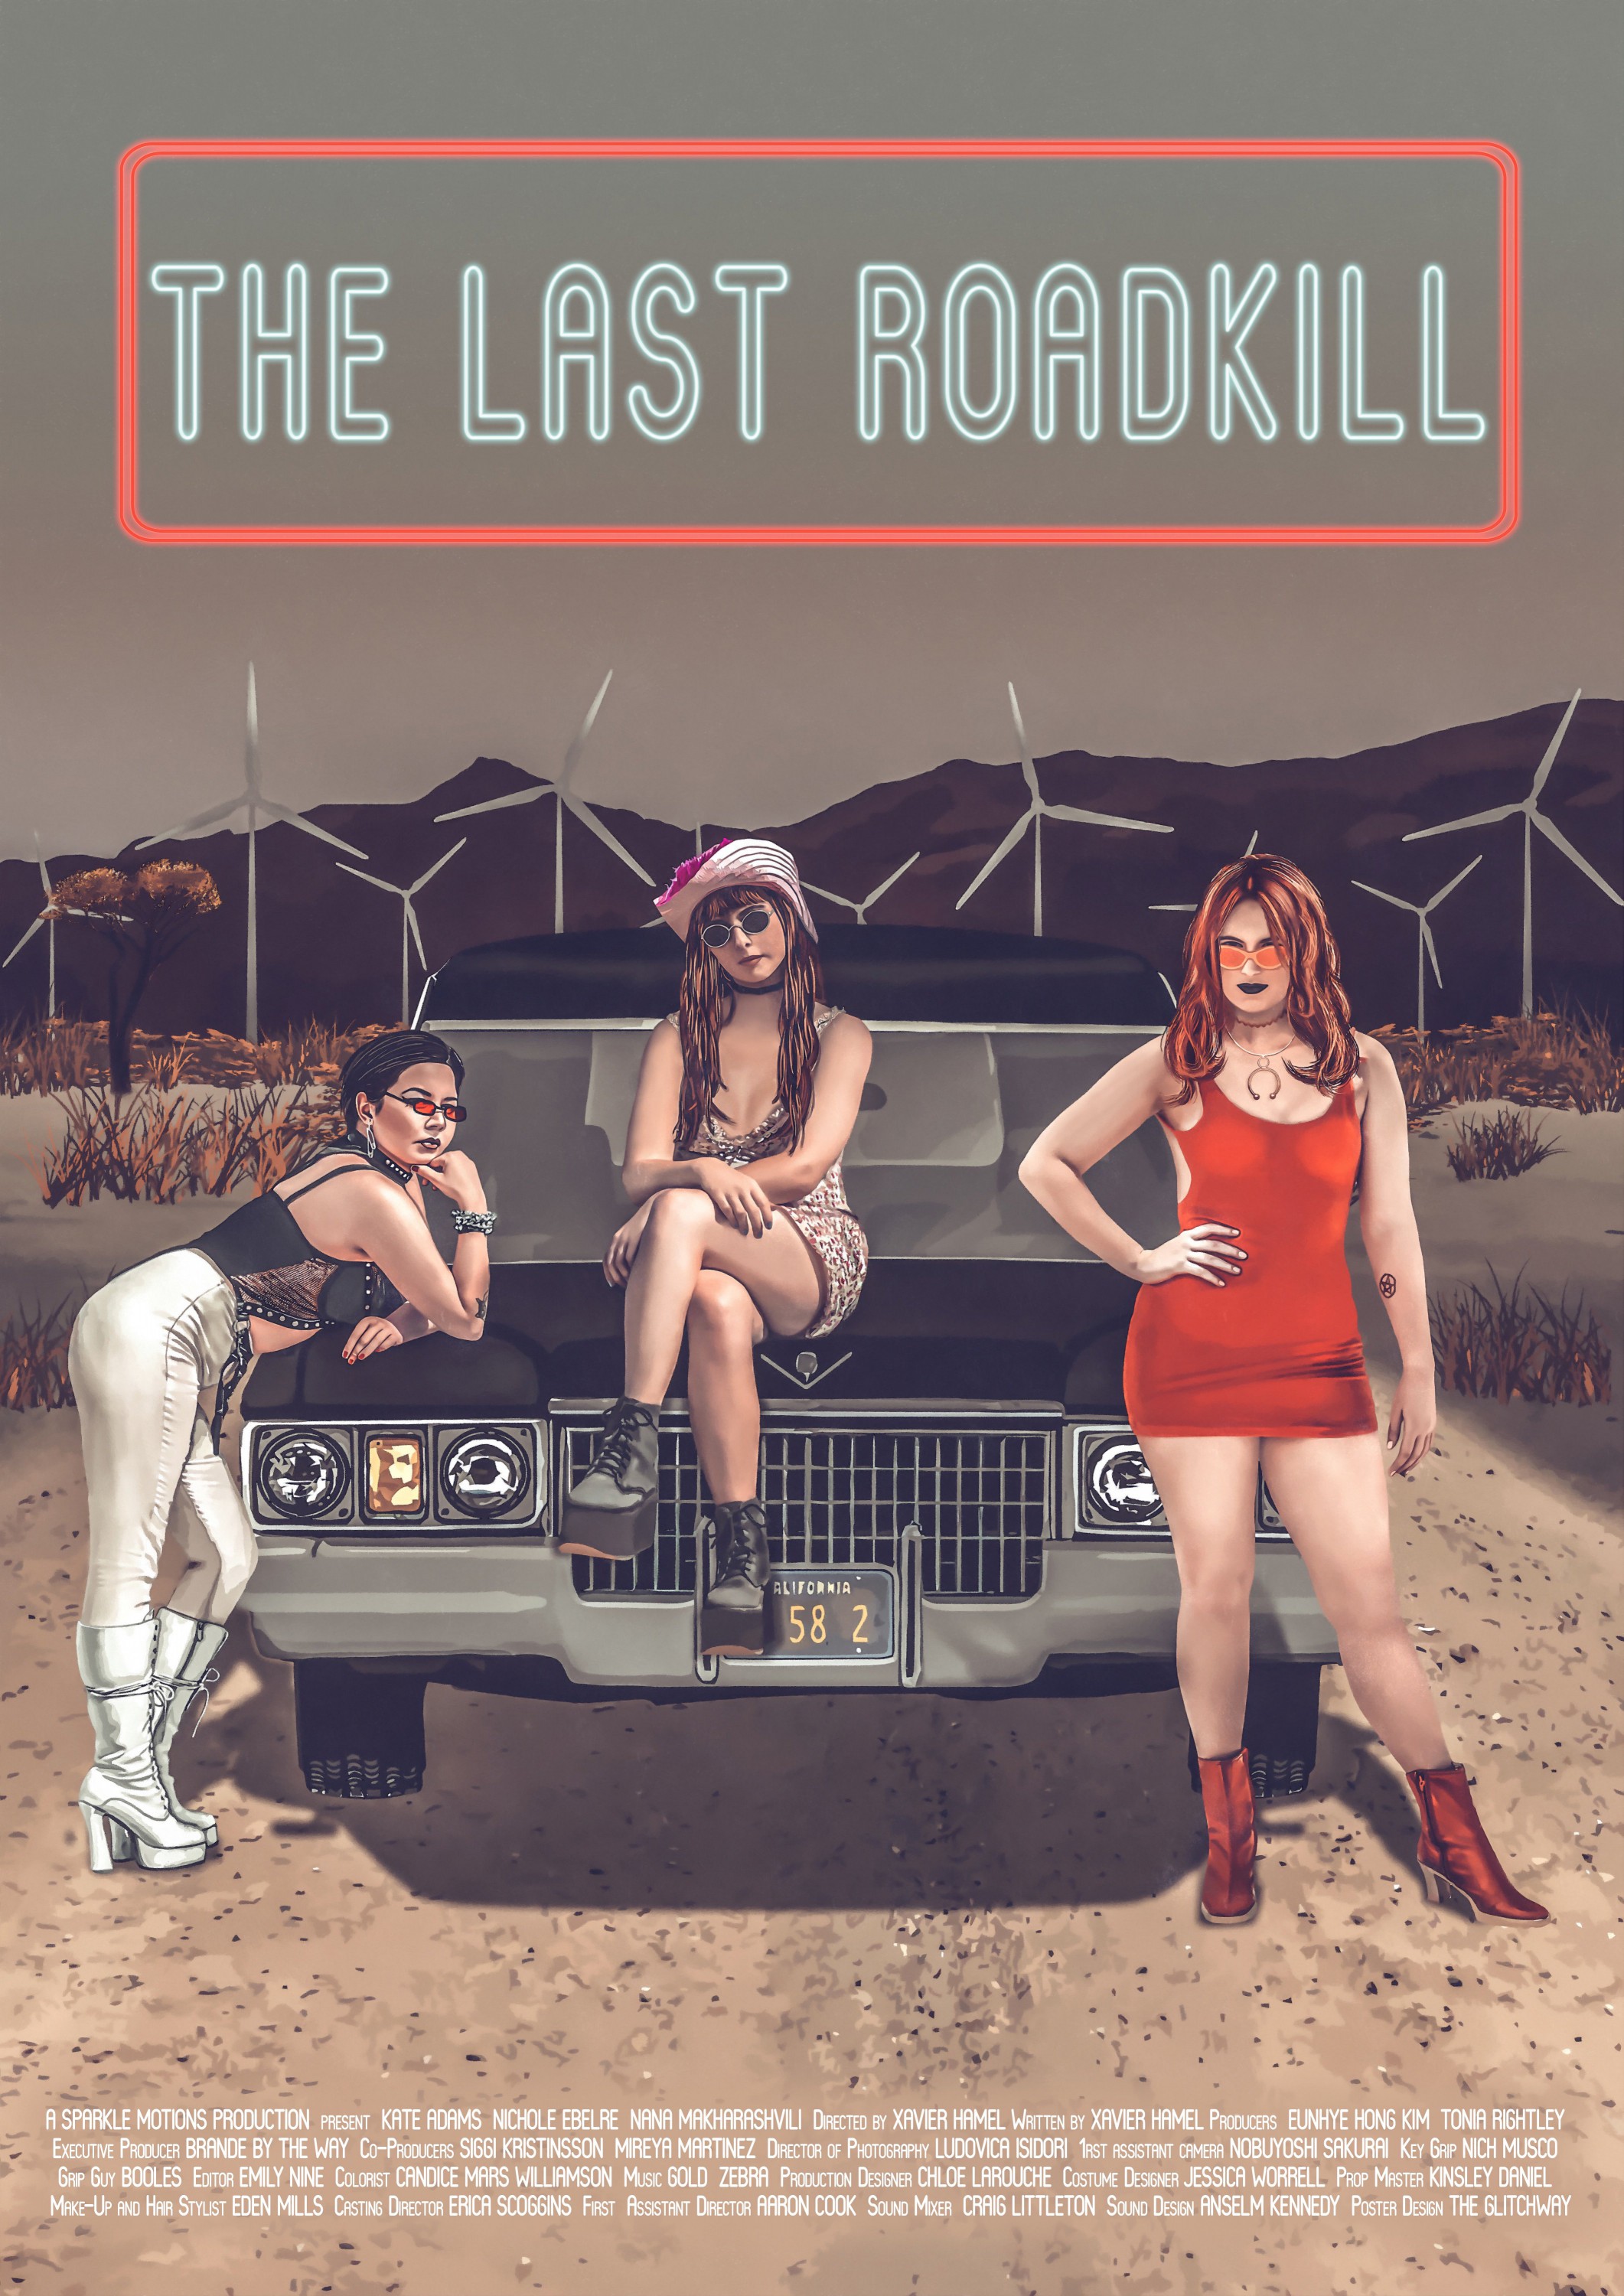 Mega Sized Movie Poster Image for The Last Roadkill